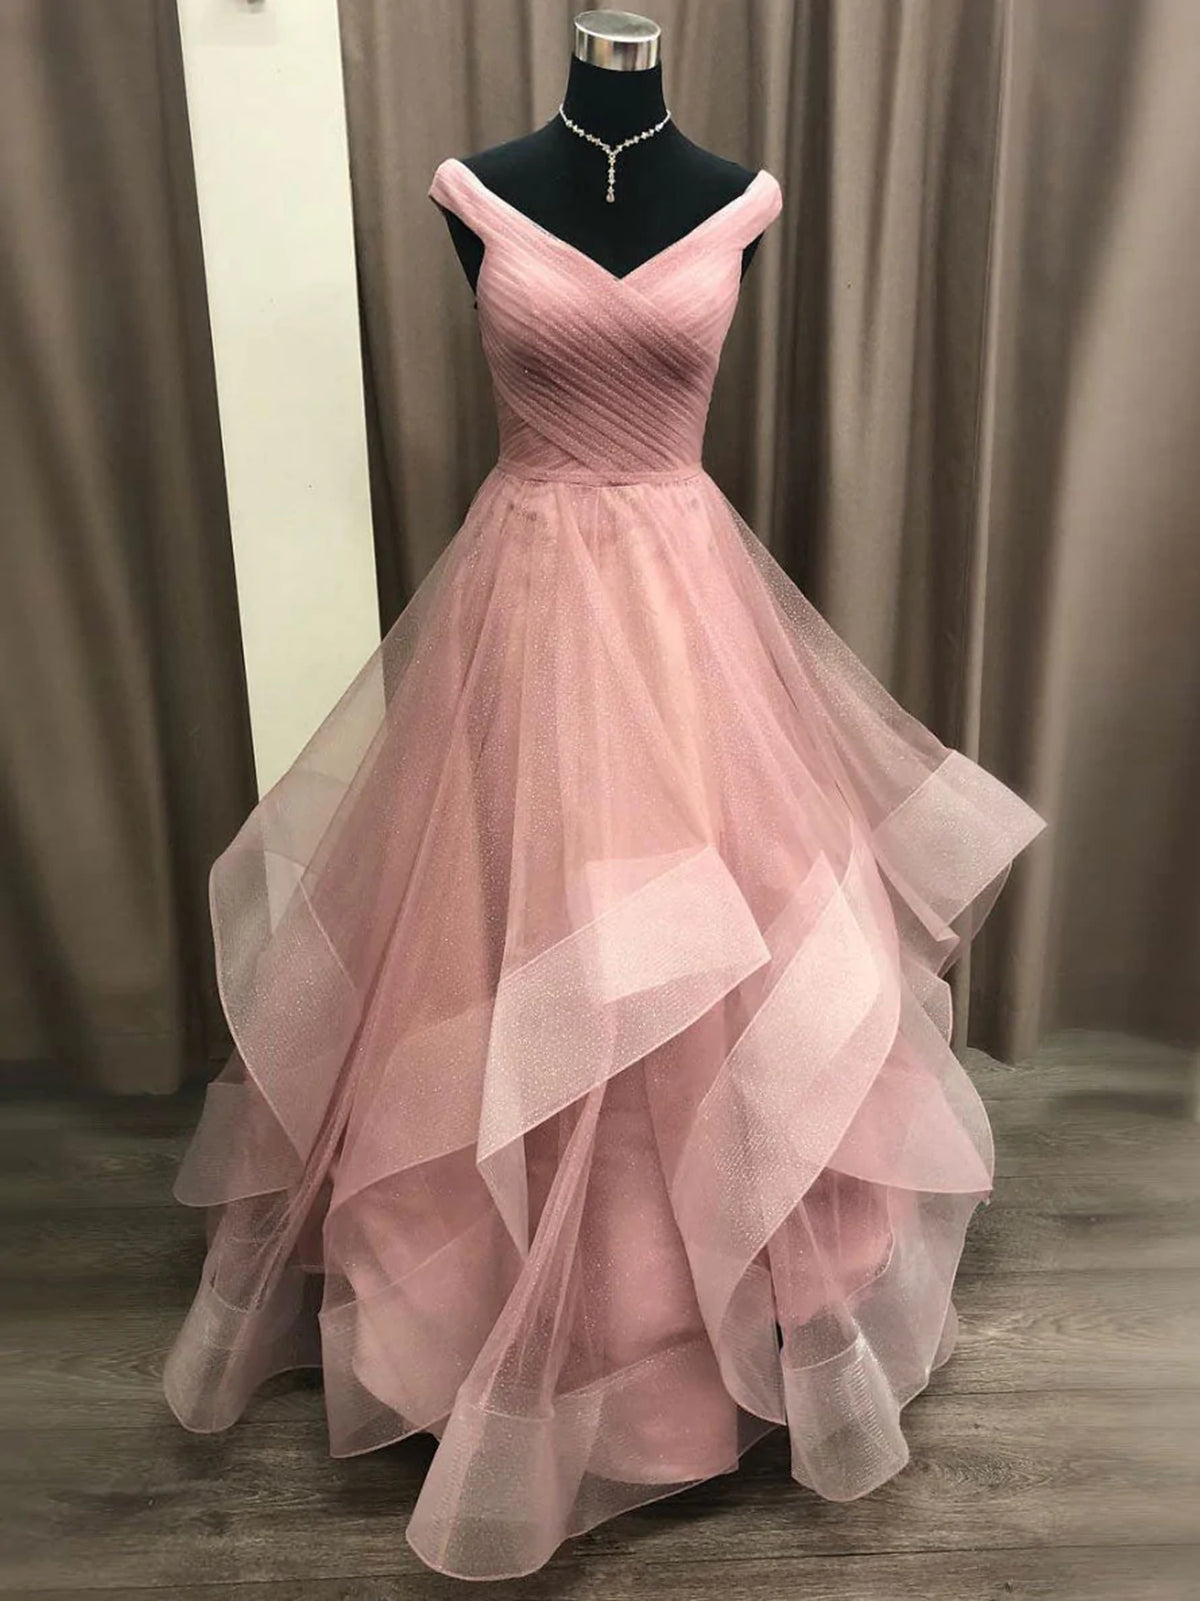 Party Dress For Teen, Off the Shoulder Light Pink Prom Dresses, Off Shoulder Light Pink Formal Evening Dresses